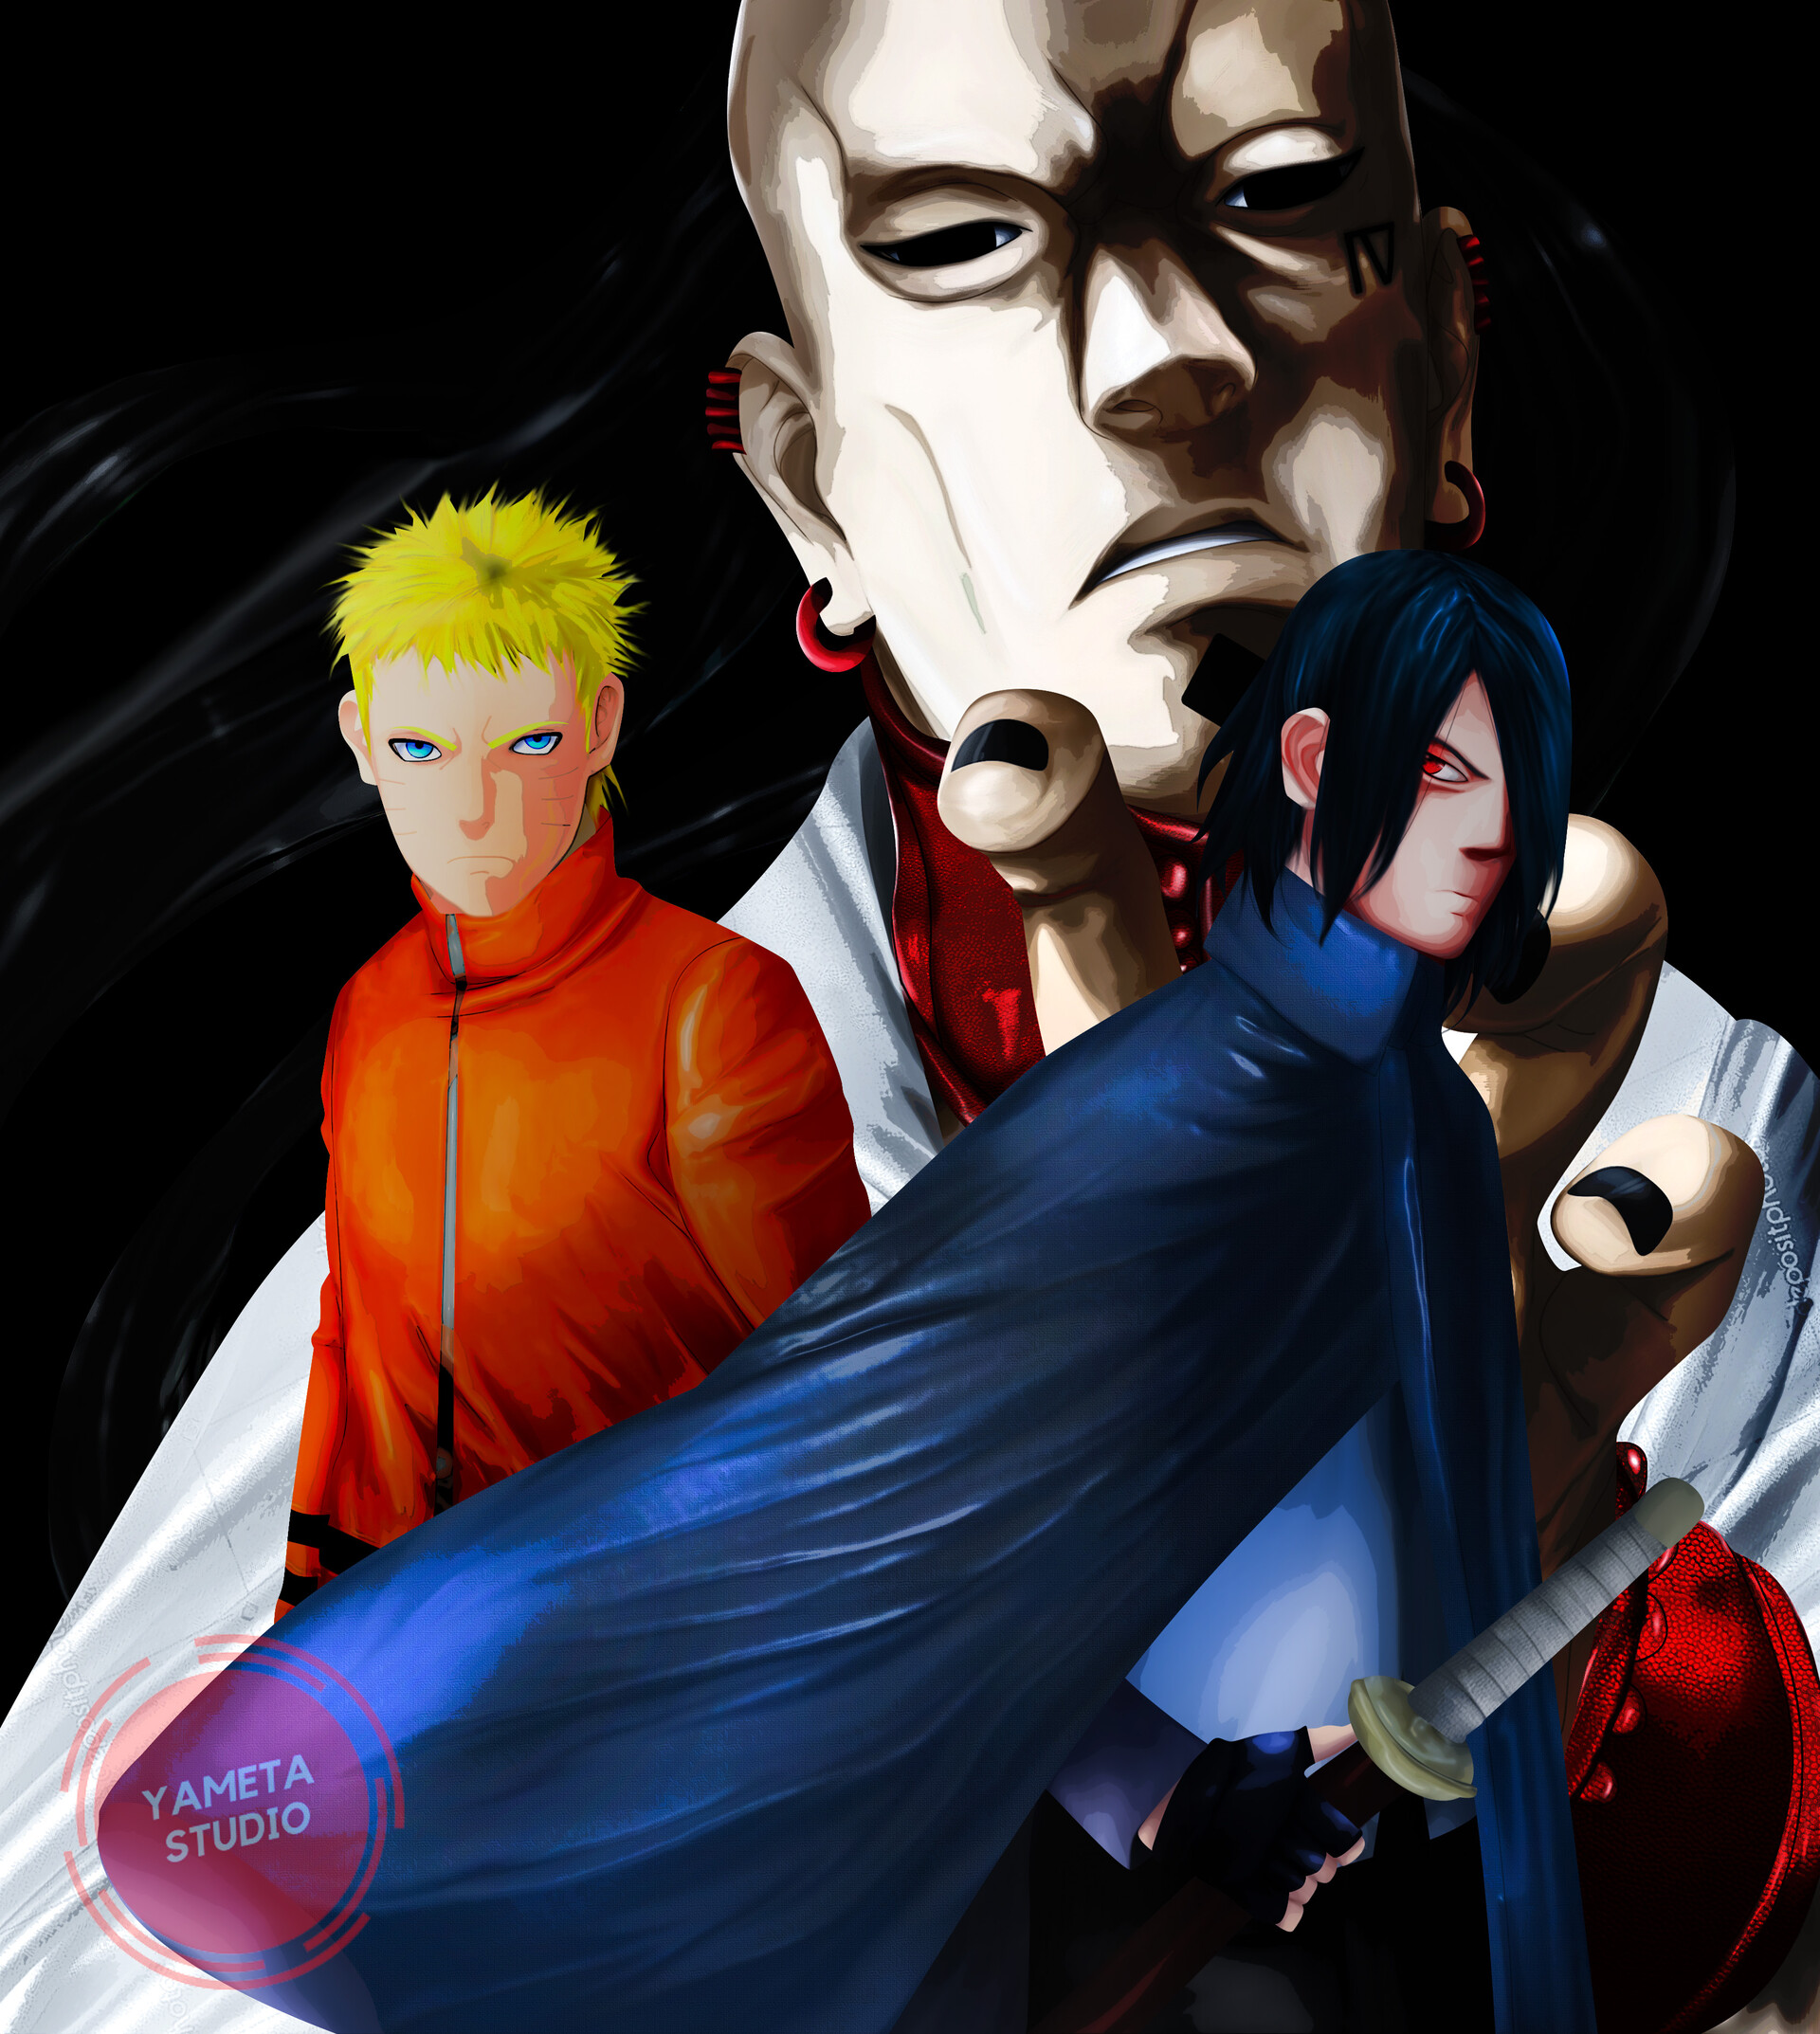 ArtStation - Naruto Vs Sasuke